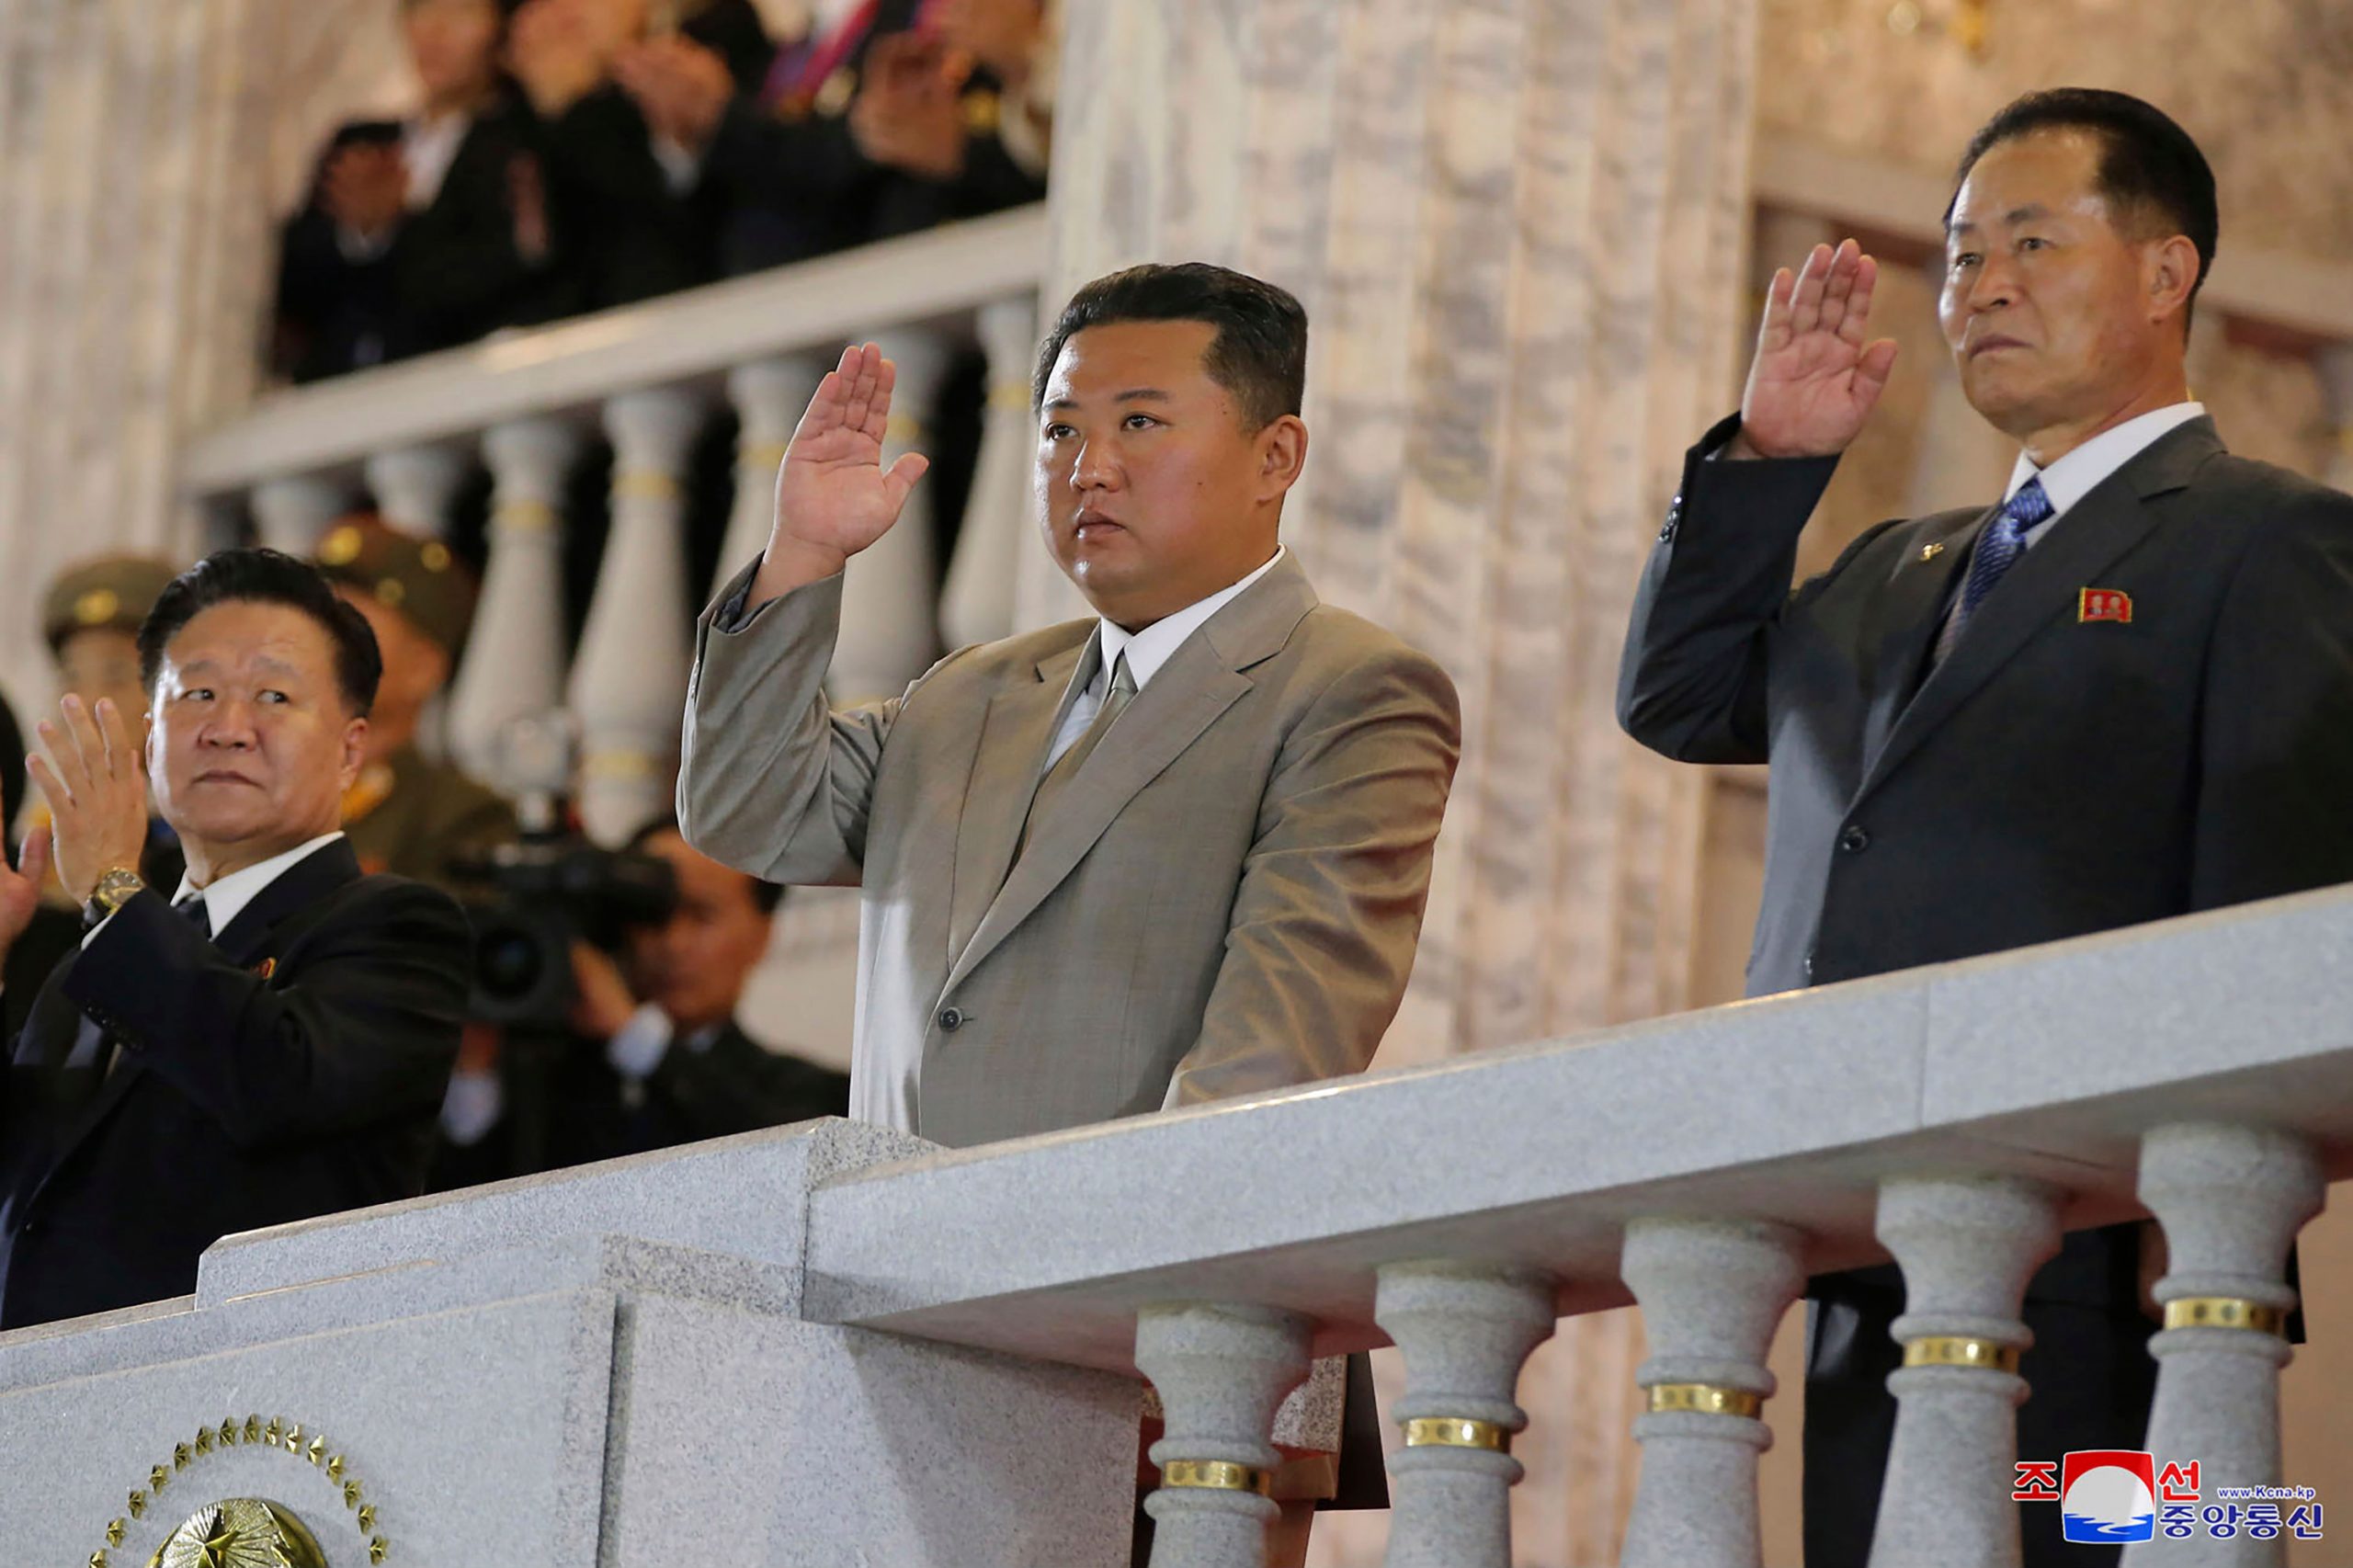 Are lifting sanctions key to ending Korean deadlock? North Korea thinks so